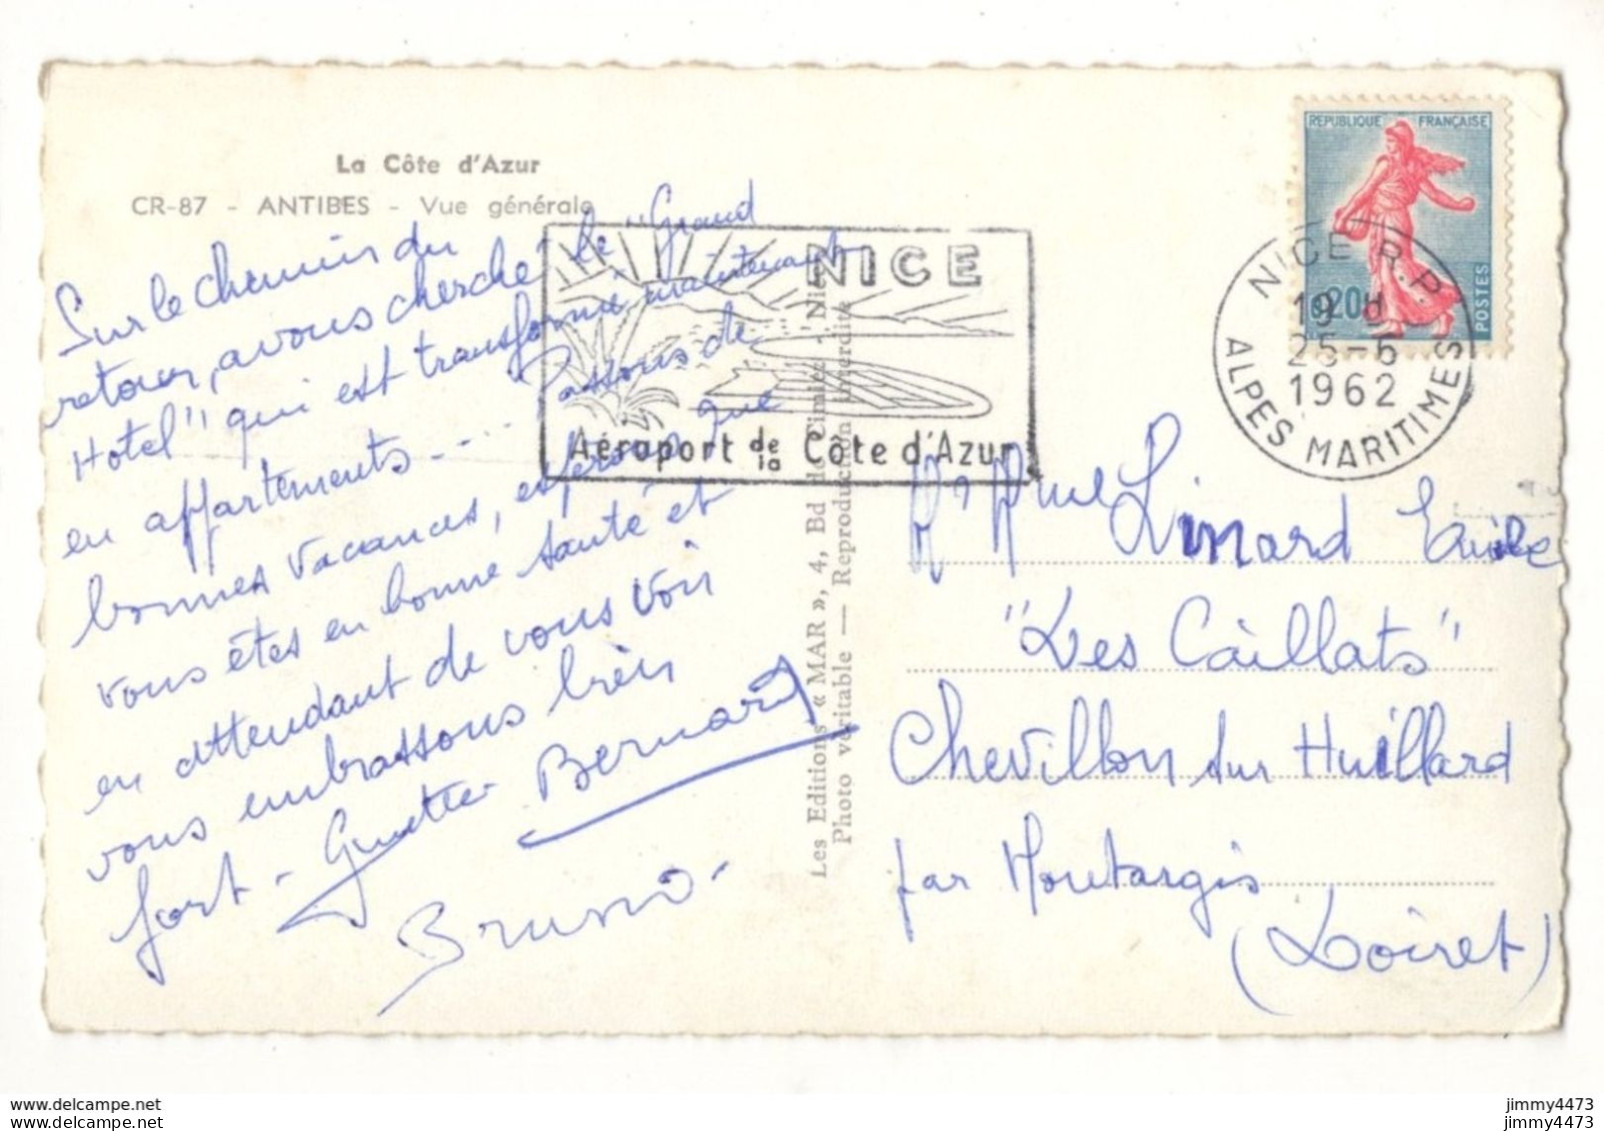 CPSM - ANTIBES En 1962 - Vue Générale - N° CR - 87 - Edit. MAR à Nice - Antibes - Vieille Ville